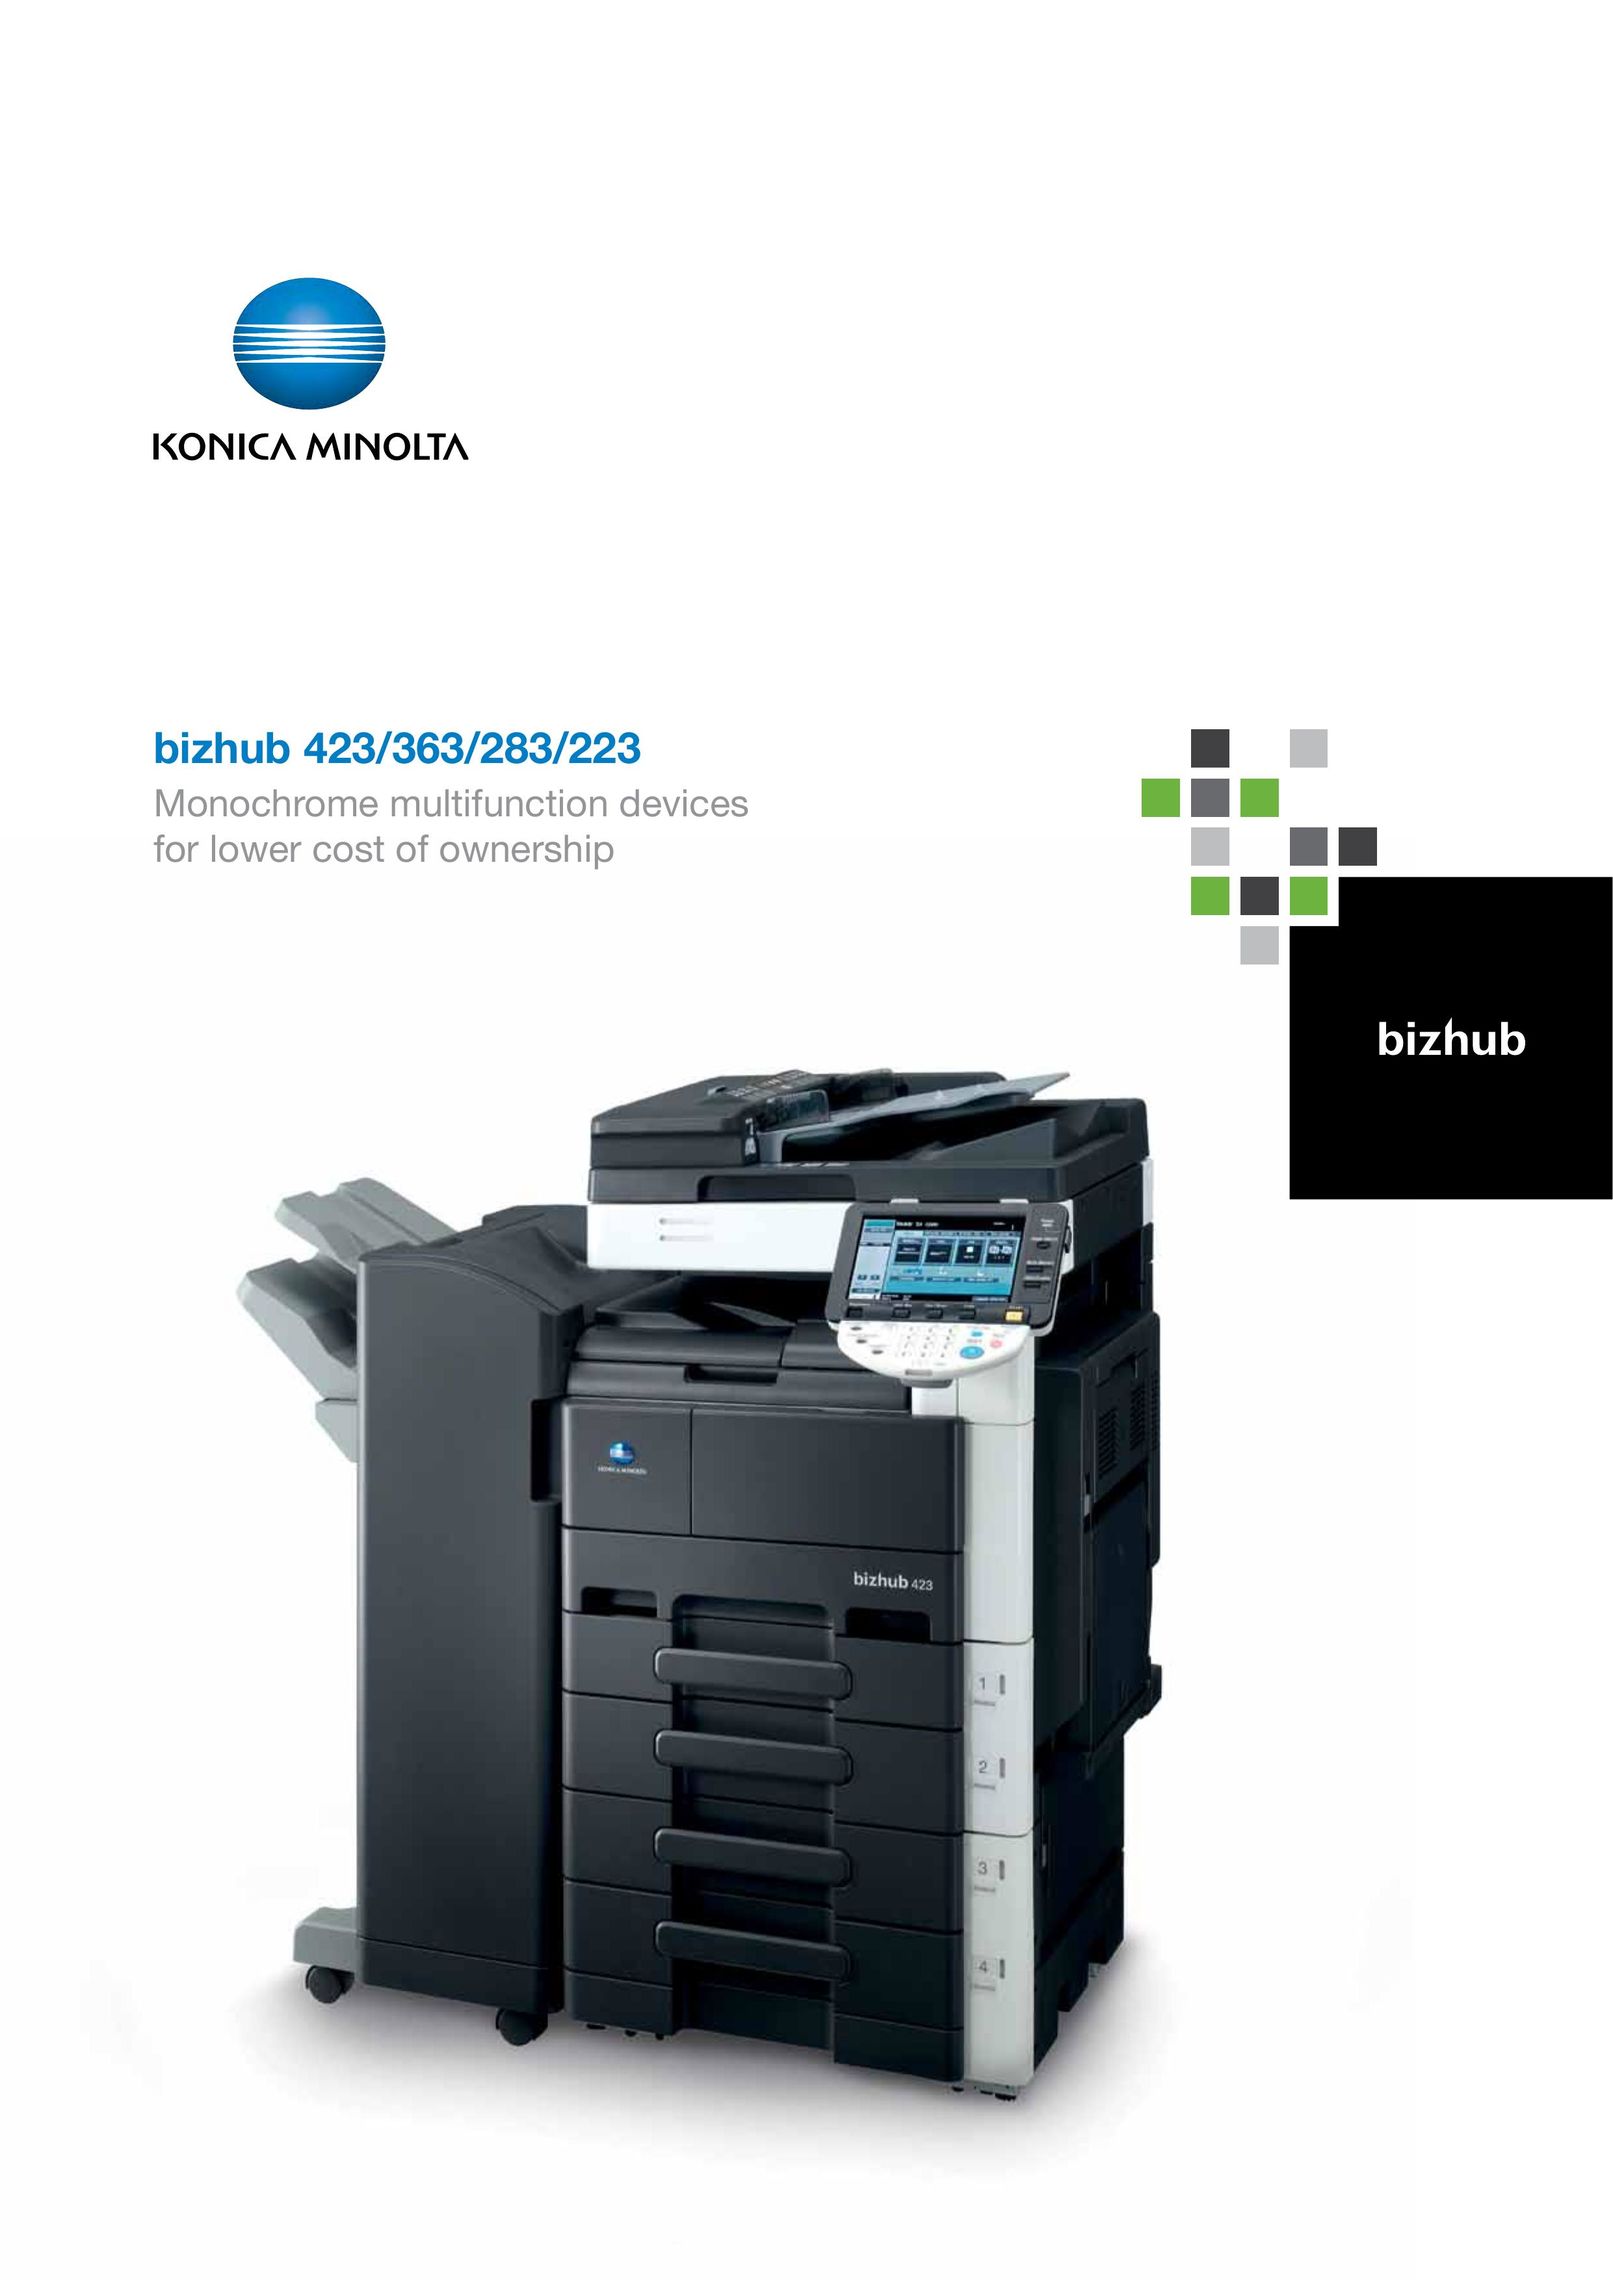 Konica Minolta 423 All in One Printer User Manual